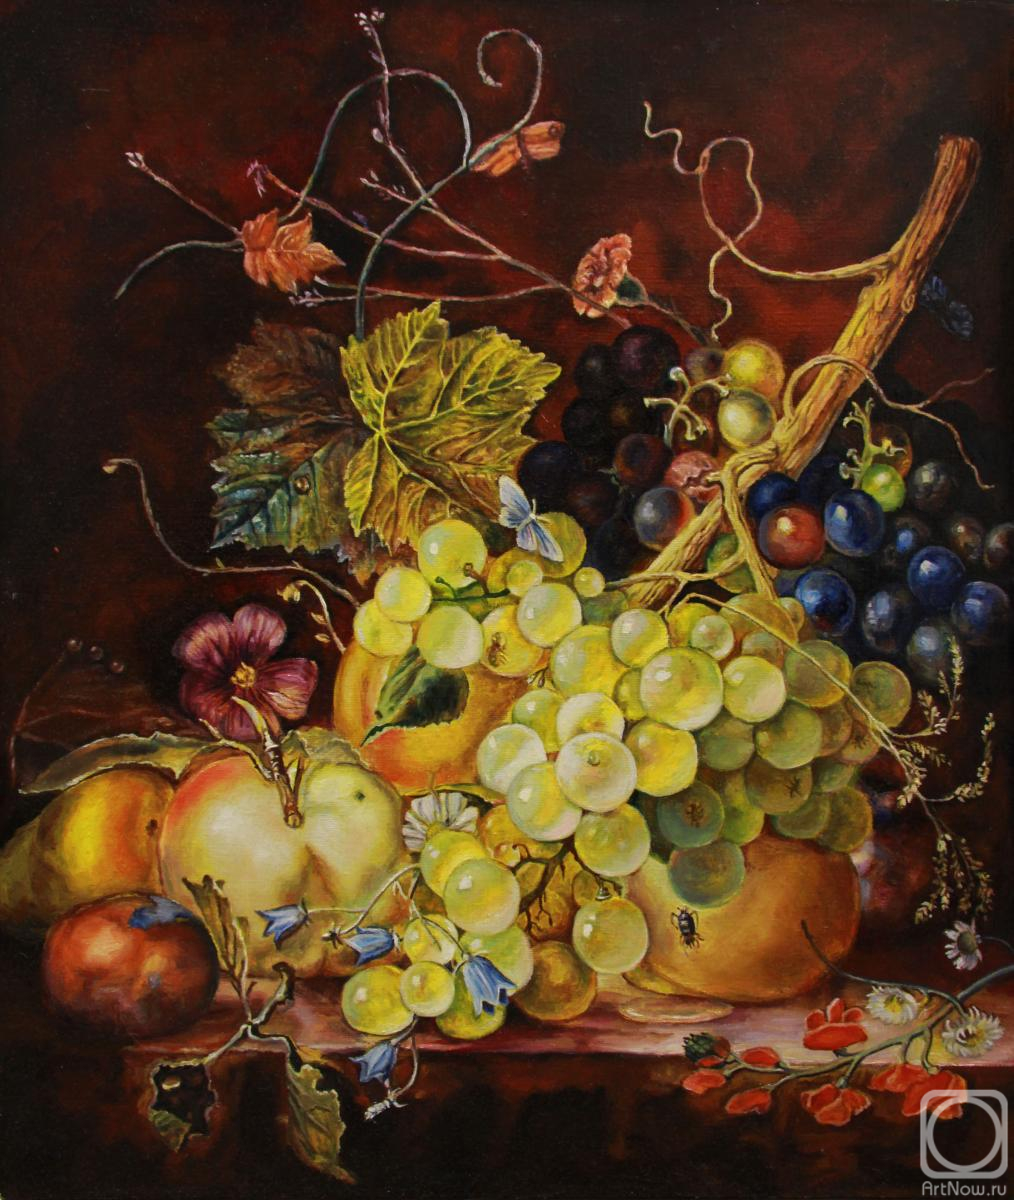 Novodvorskaya Alexandra. Copy of Jan Van Huysum painting "Still life with grapes and peaches on the table"